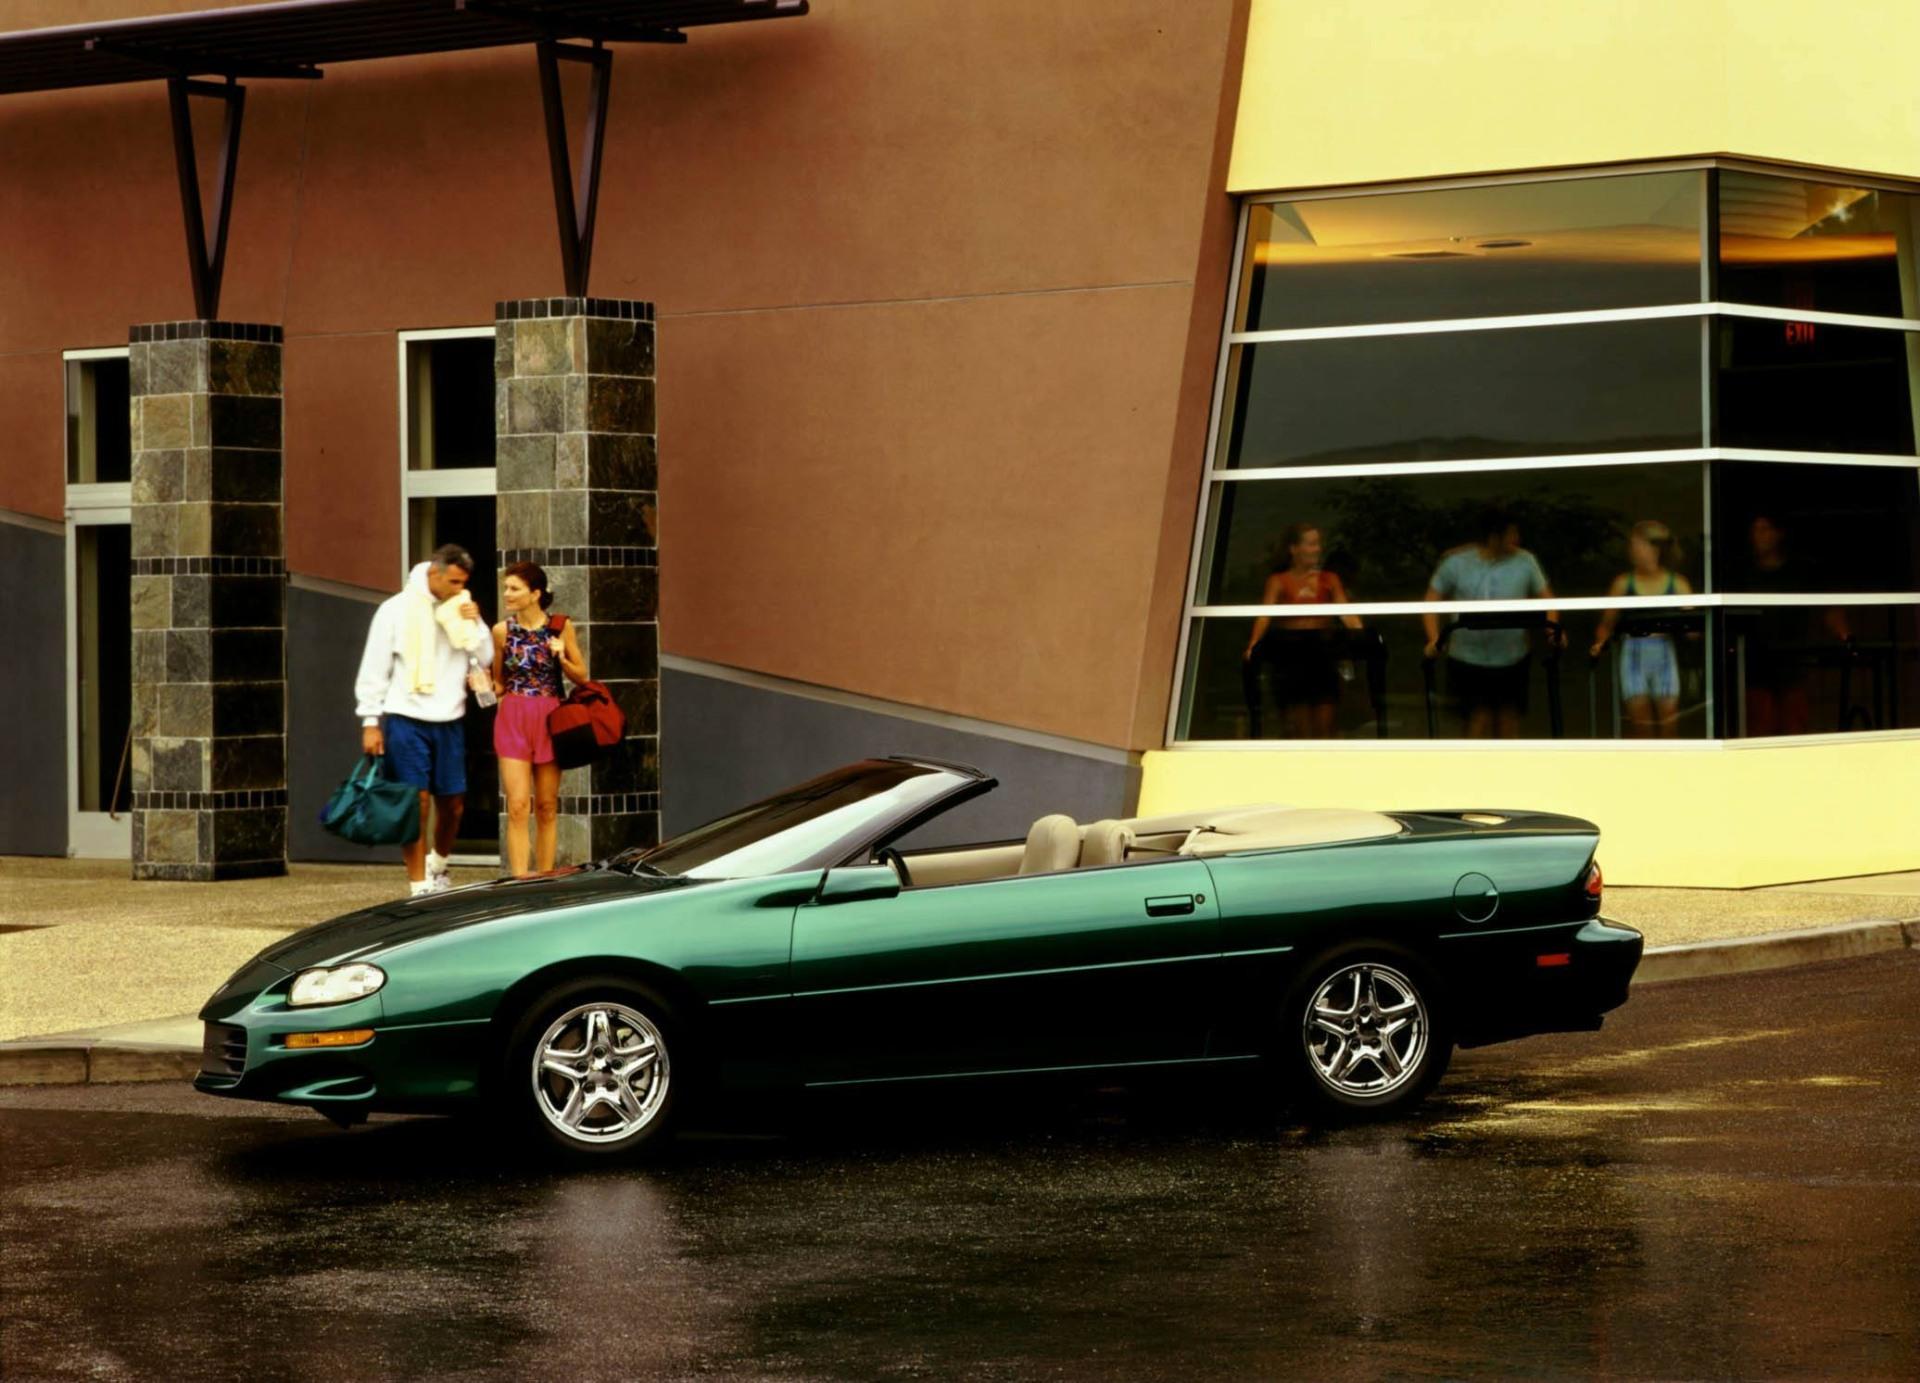 1999 Chevrolet Camaro